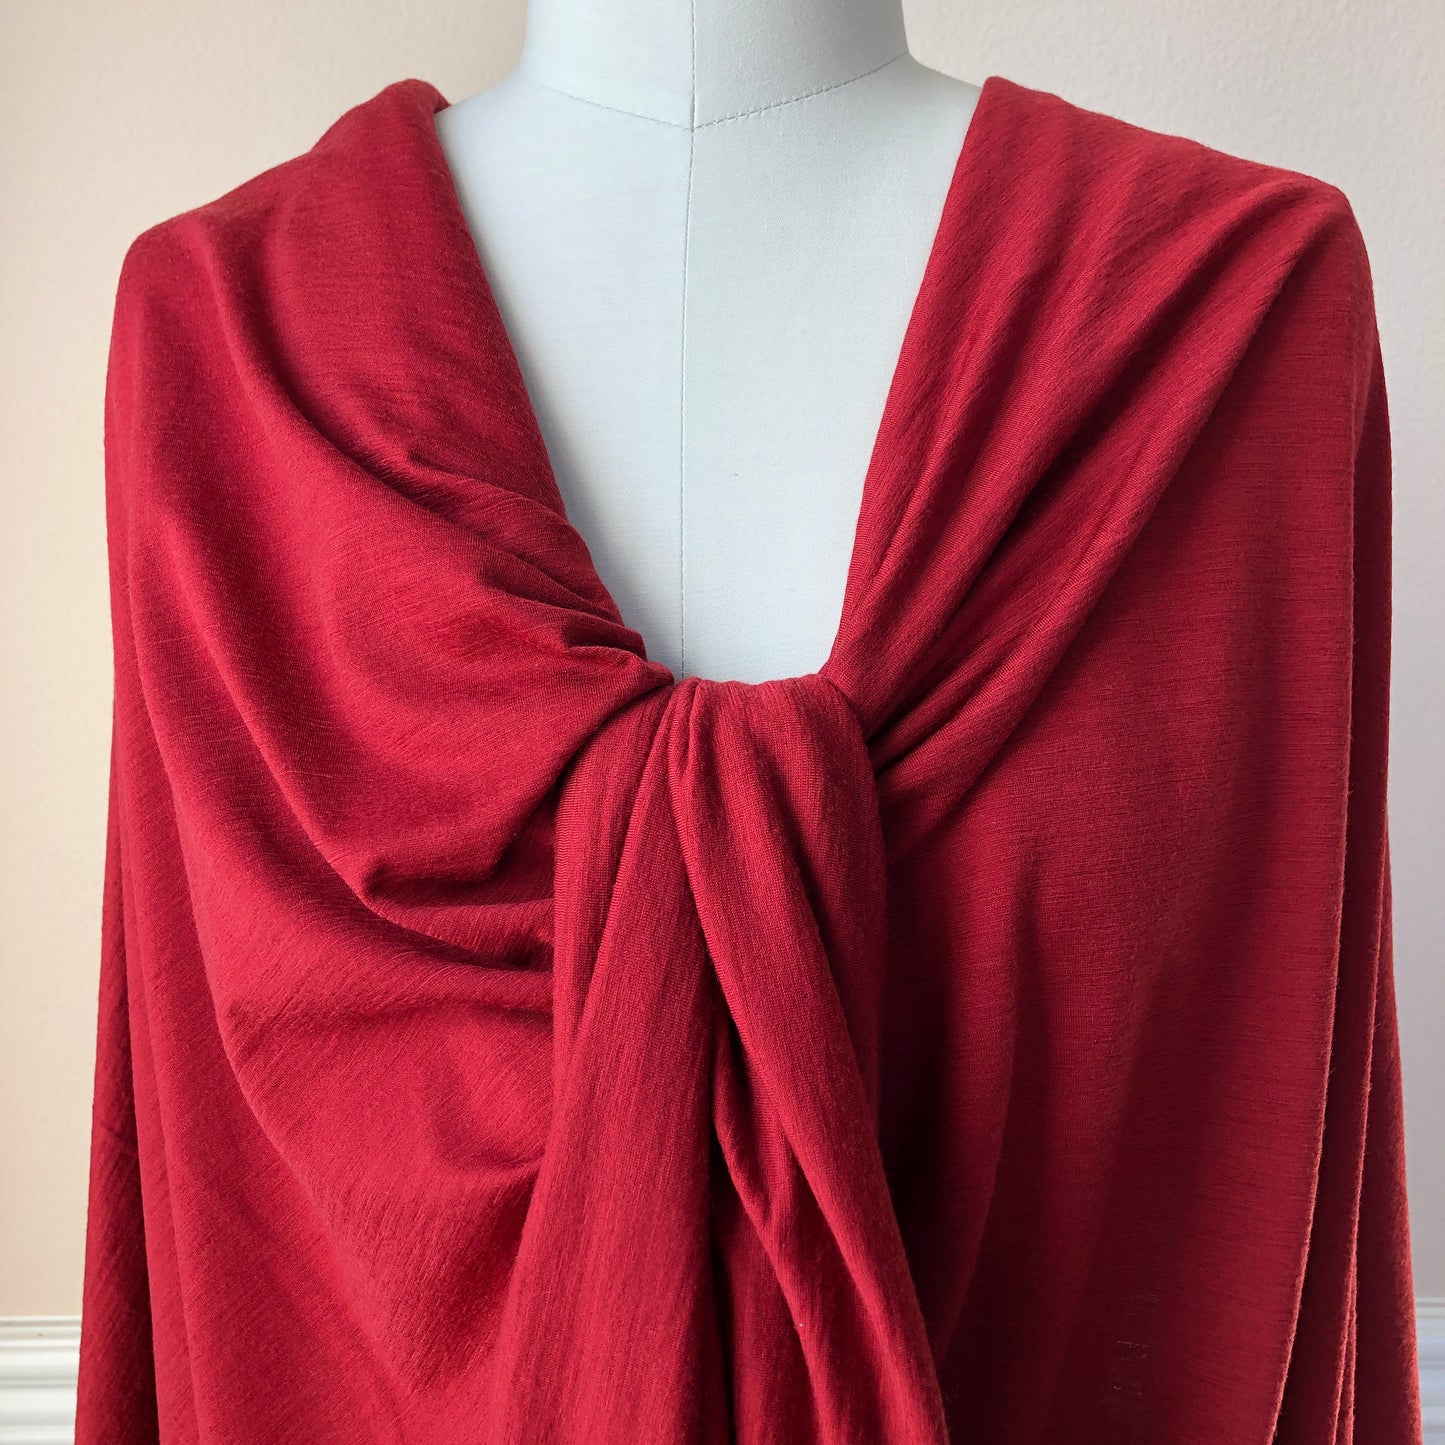 Close view of elegant red color merino wool fabric.